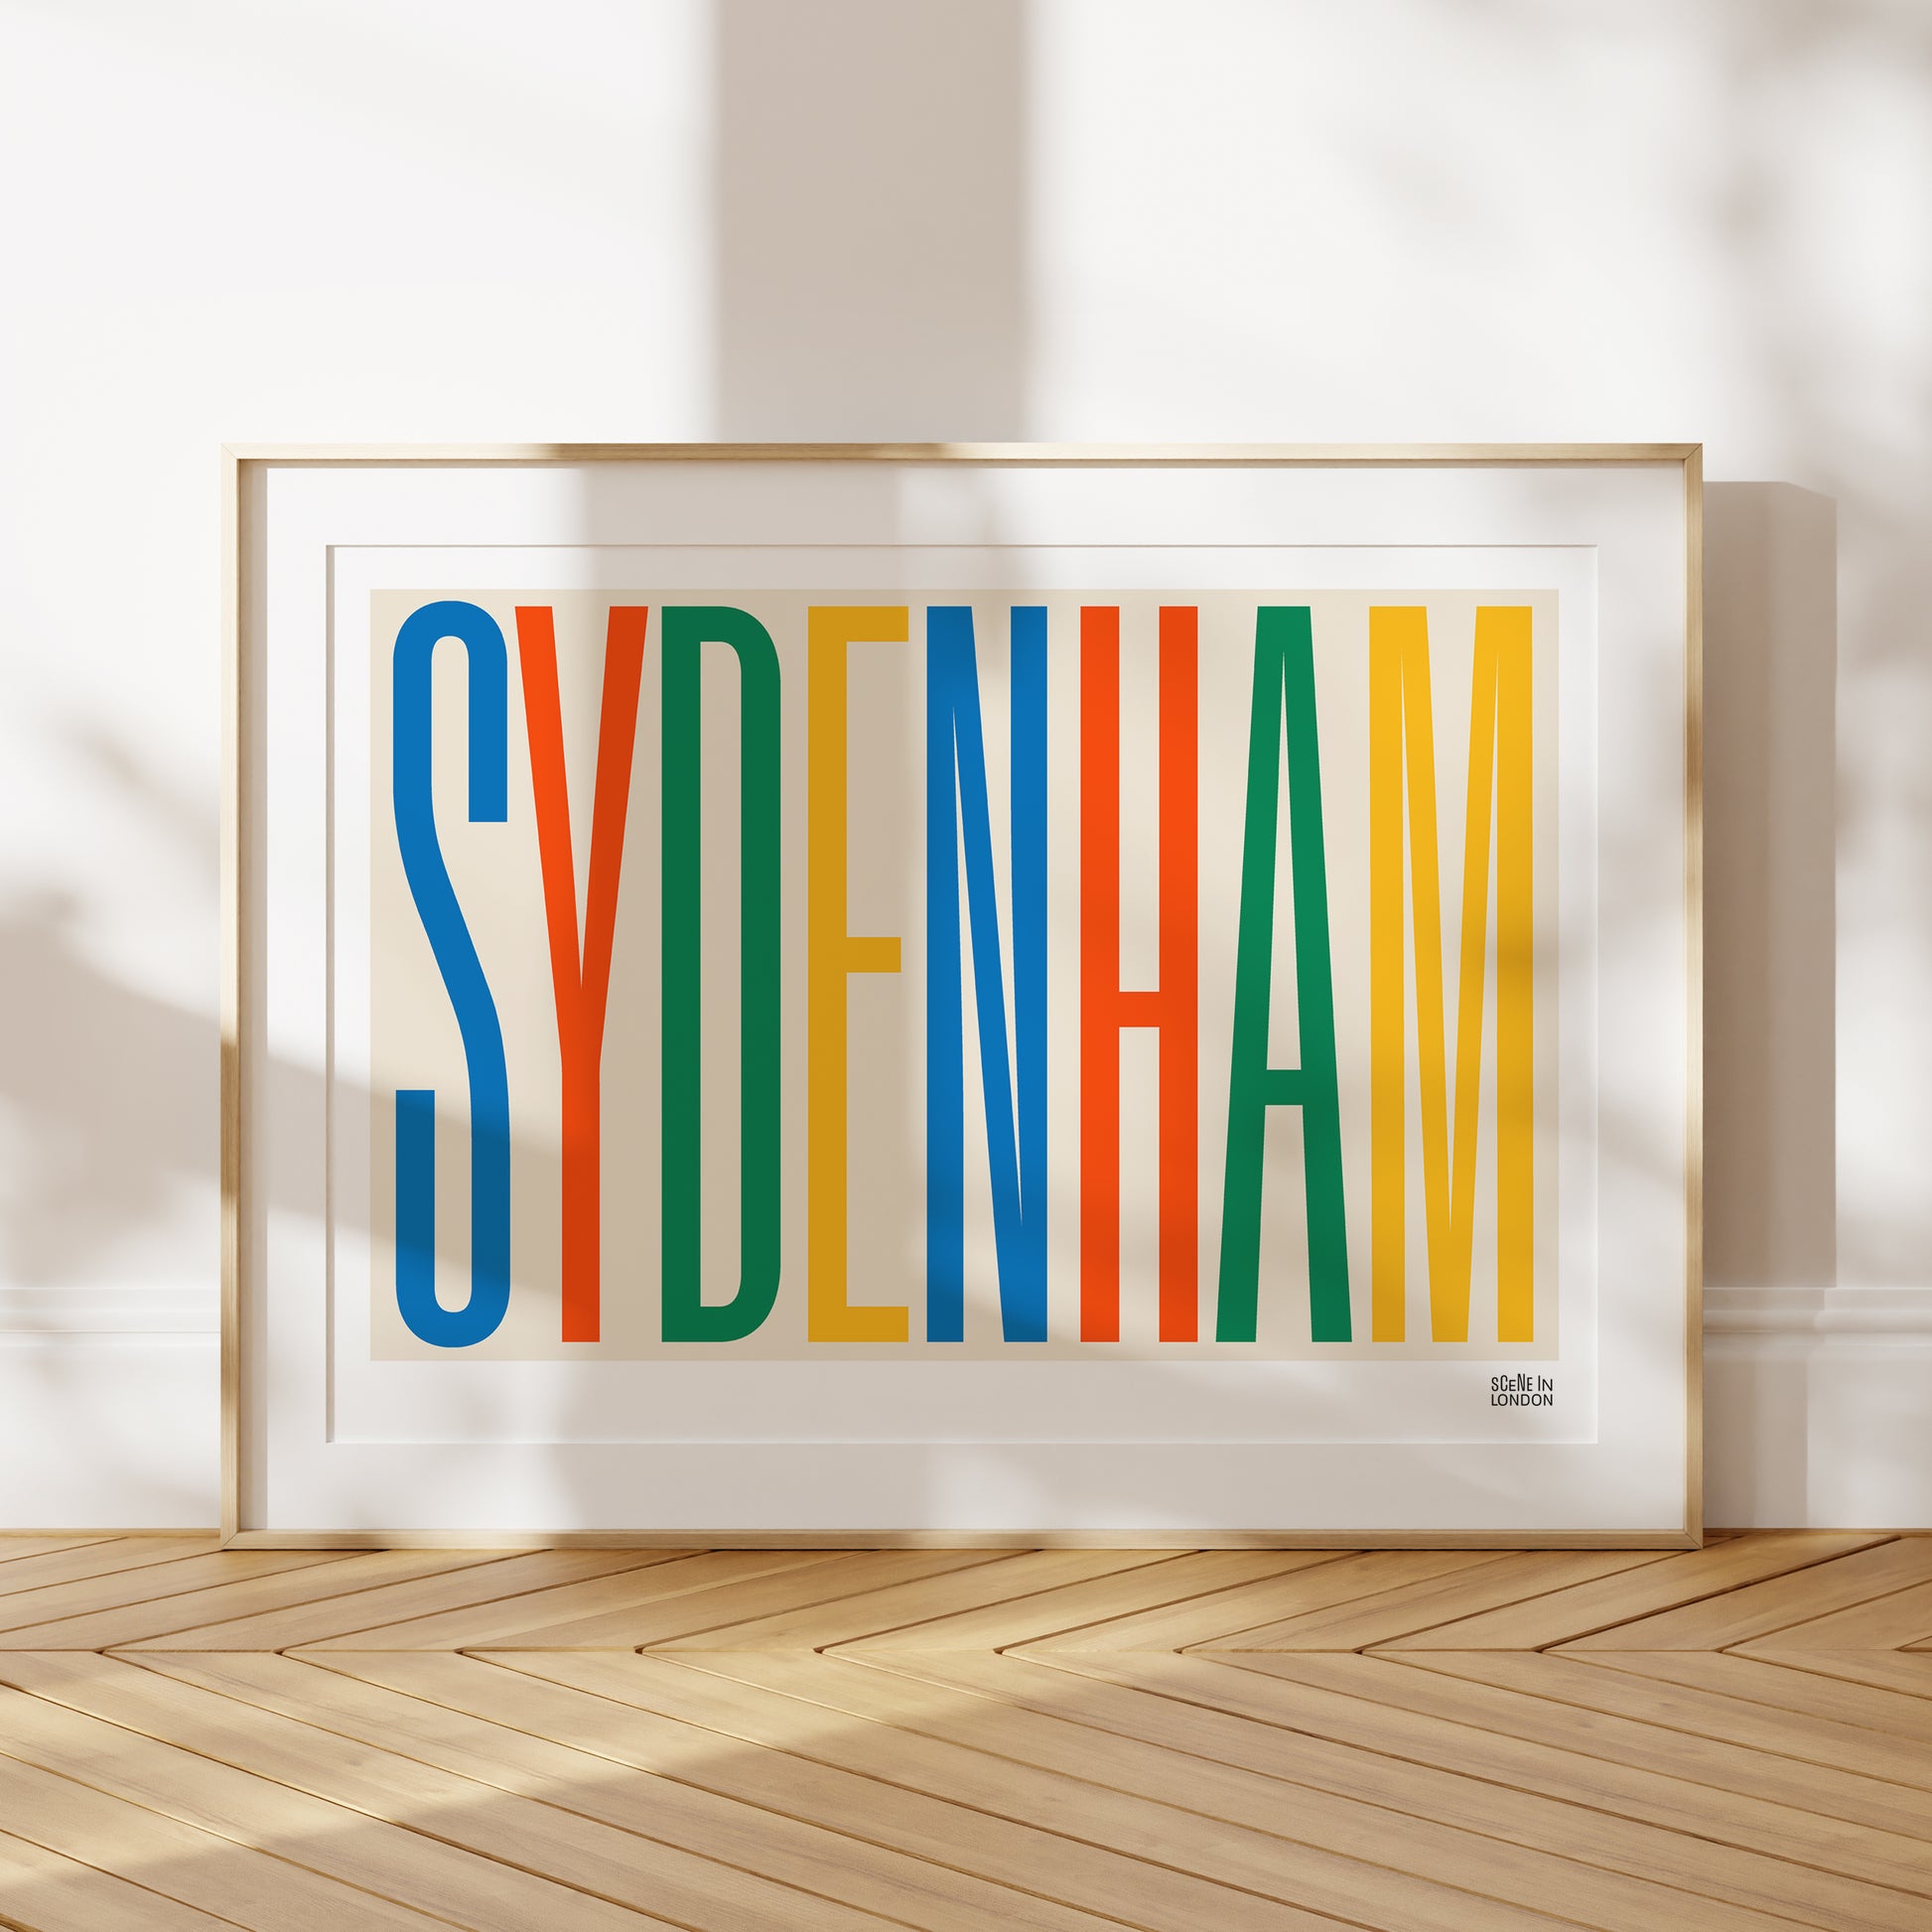 Sydenham art print in colourful typography